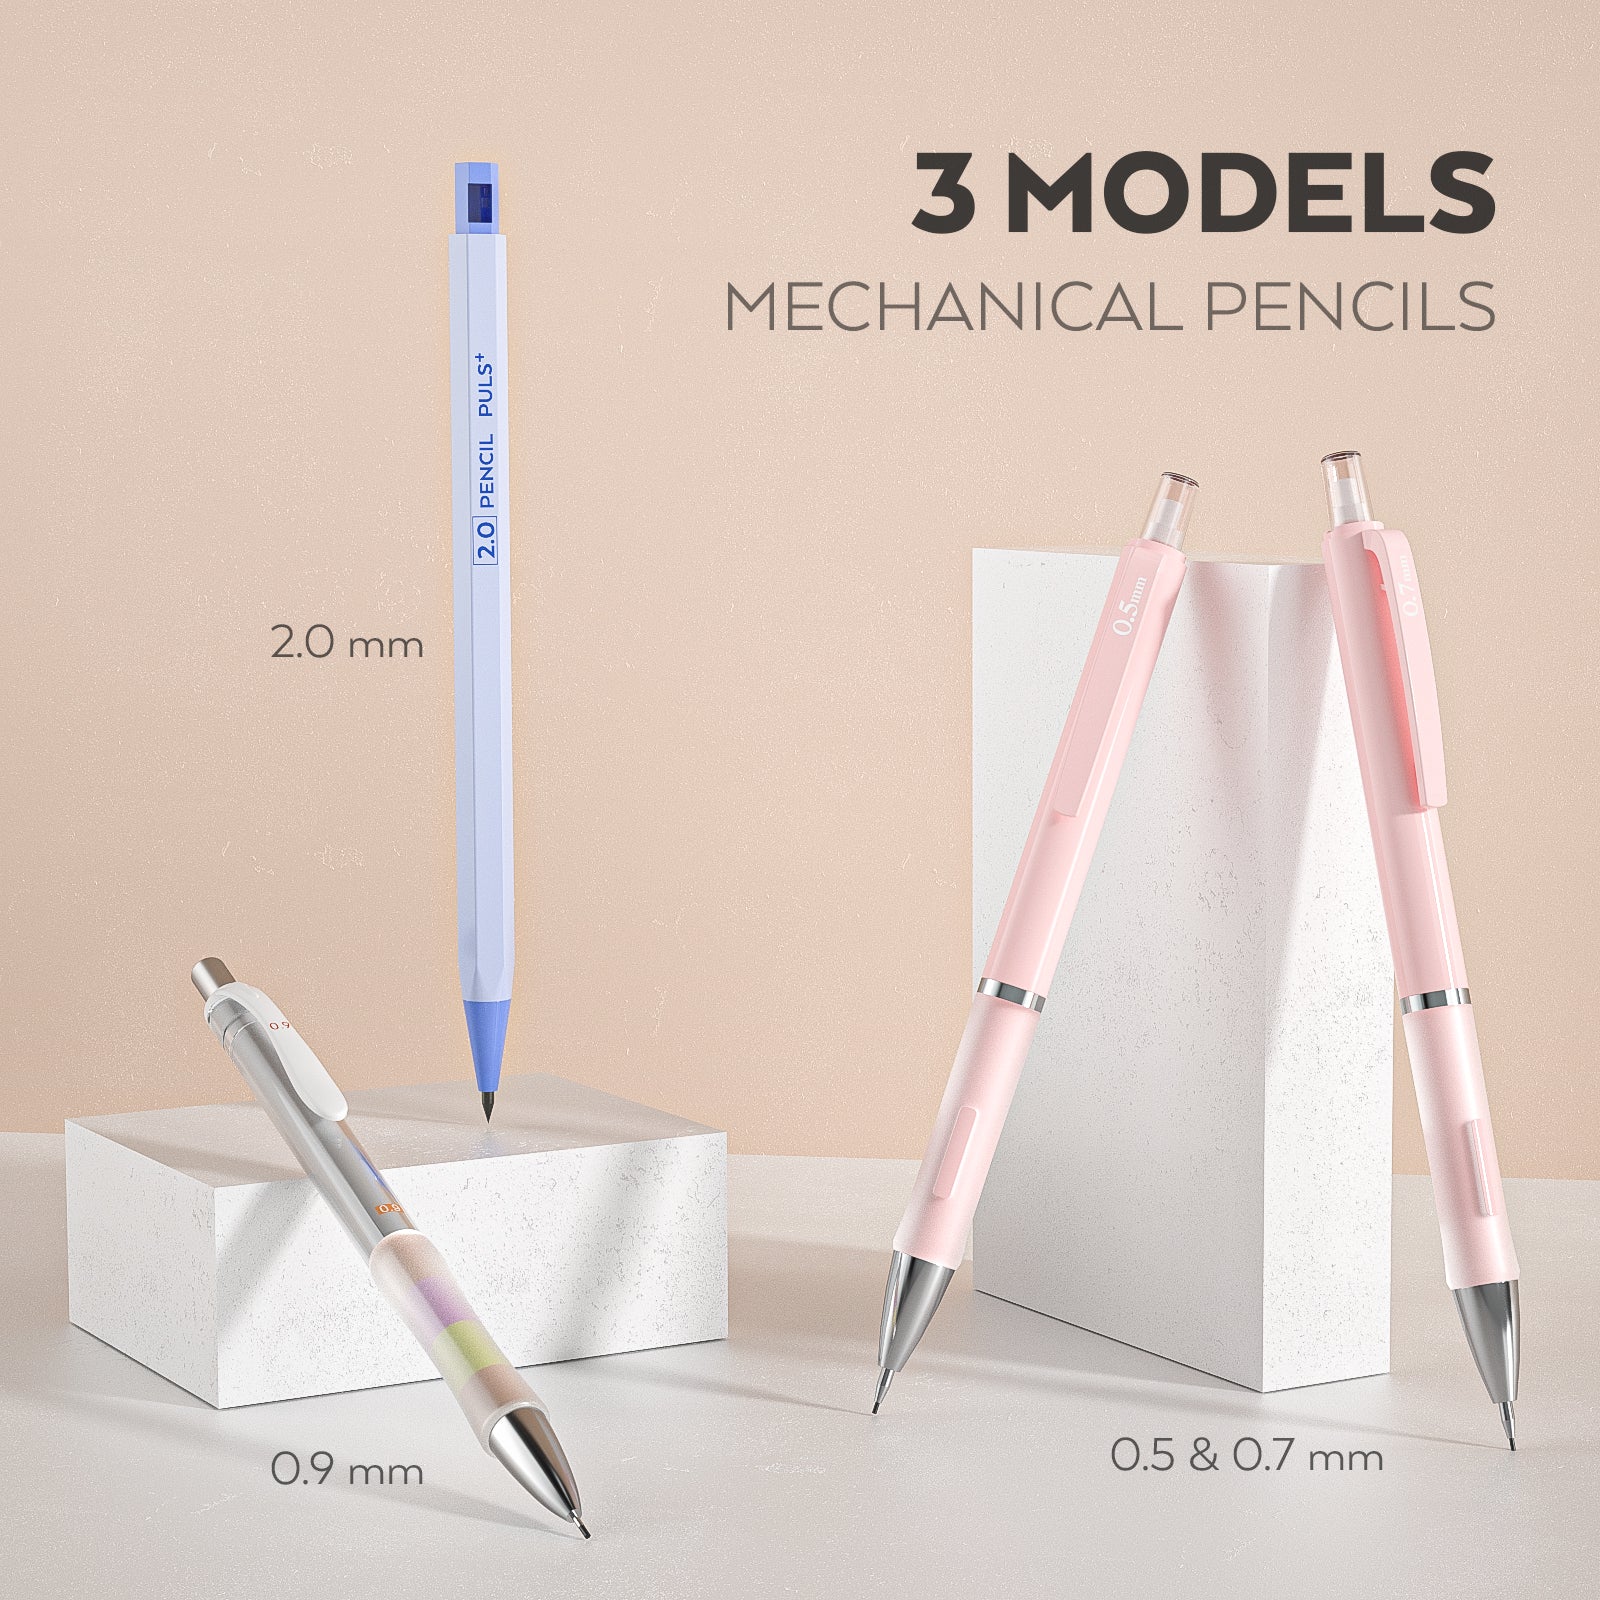 Nicpro 10 PCS 0.5 mm Mechanical Pencils Set with Case, Pastel Aestheti